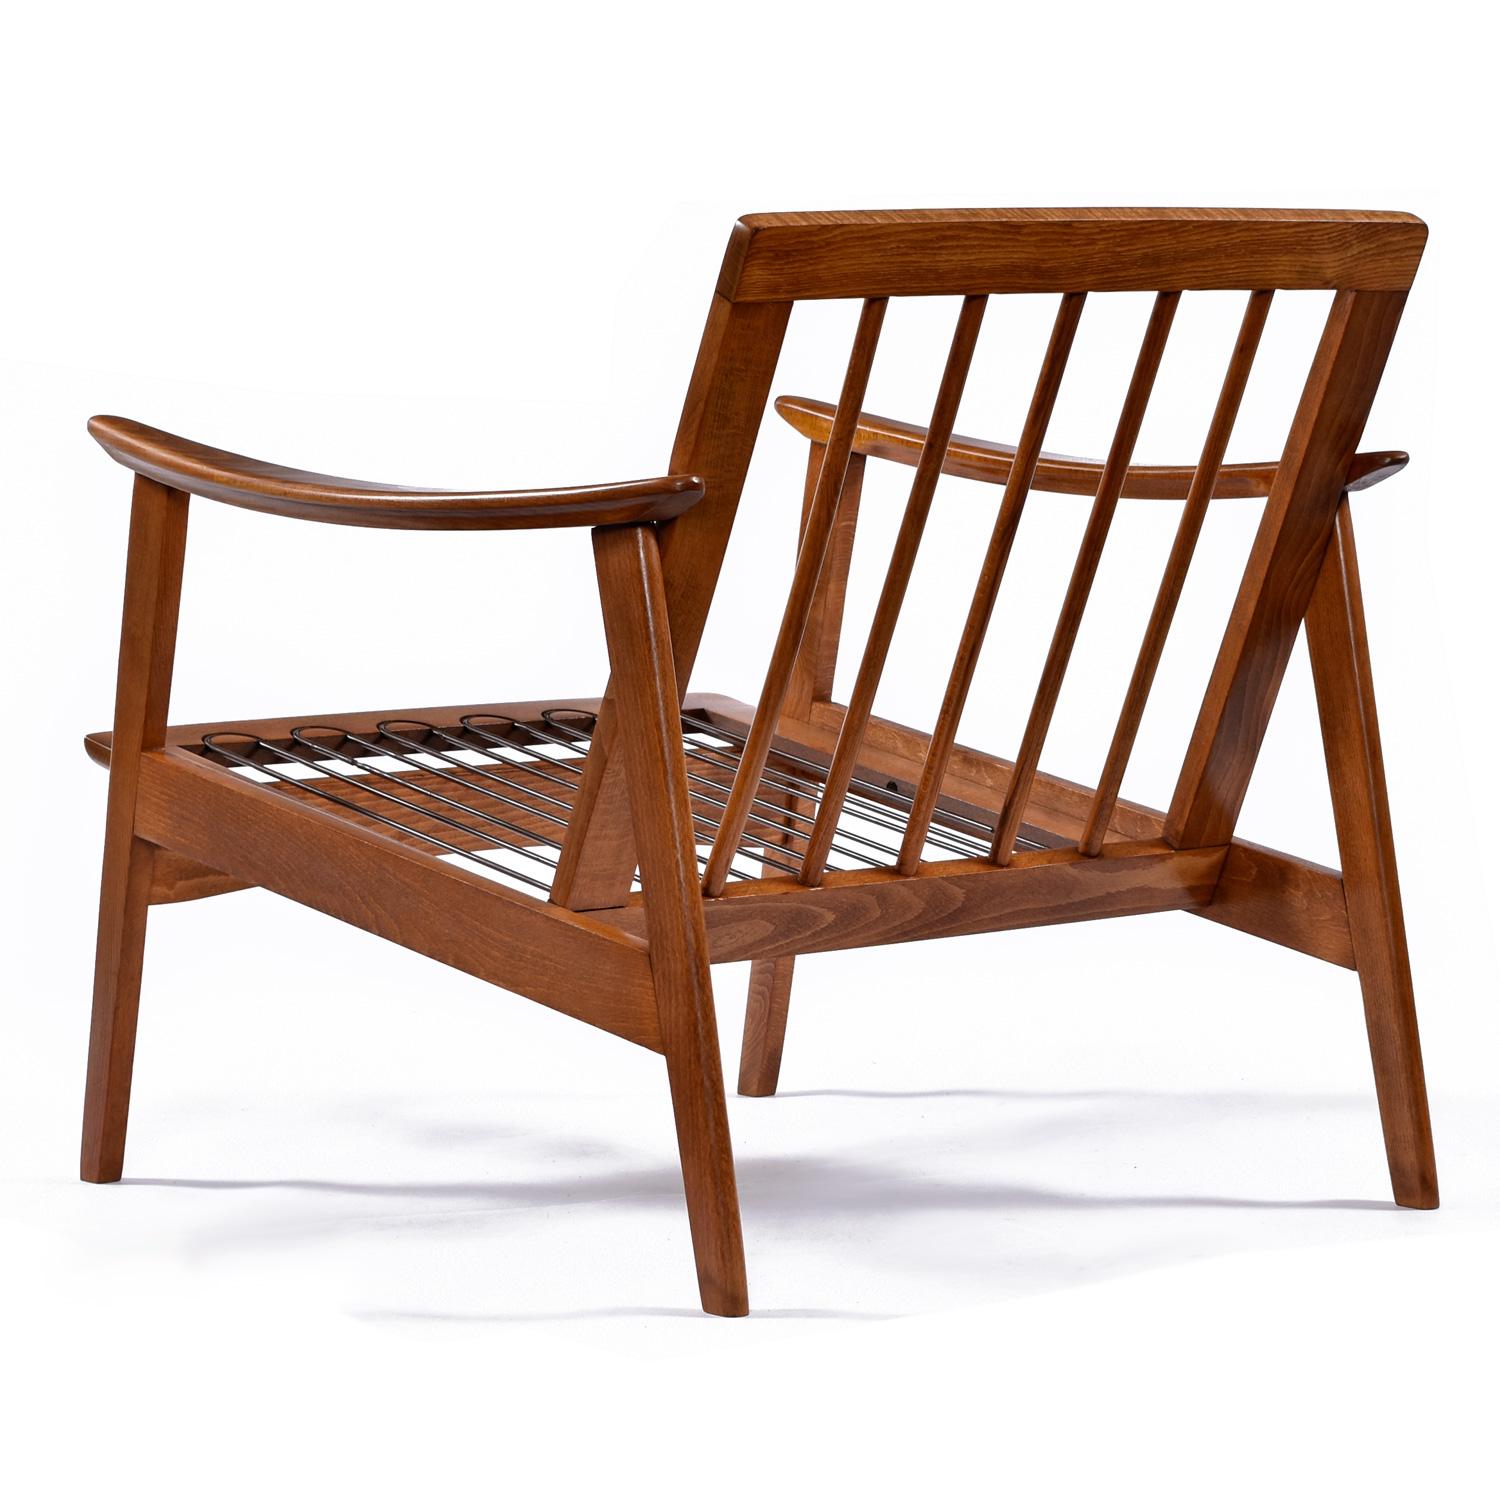 1960's Cognac Leather Scandinavian Modern Beech Wood Lounge Chairs For Sale 2